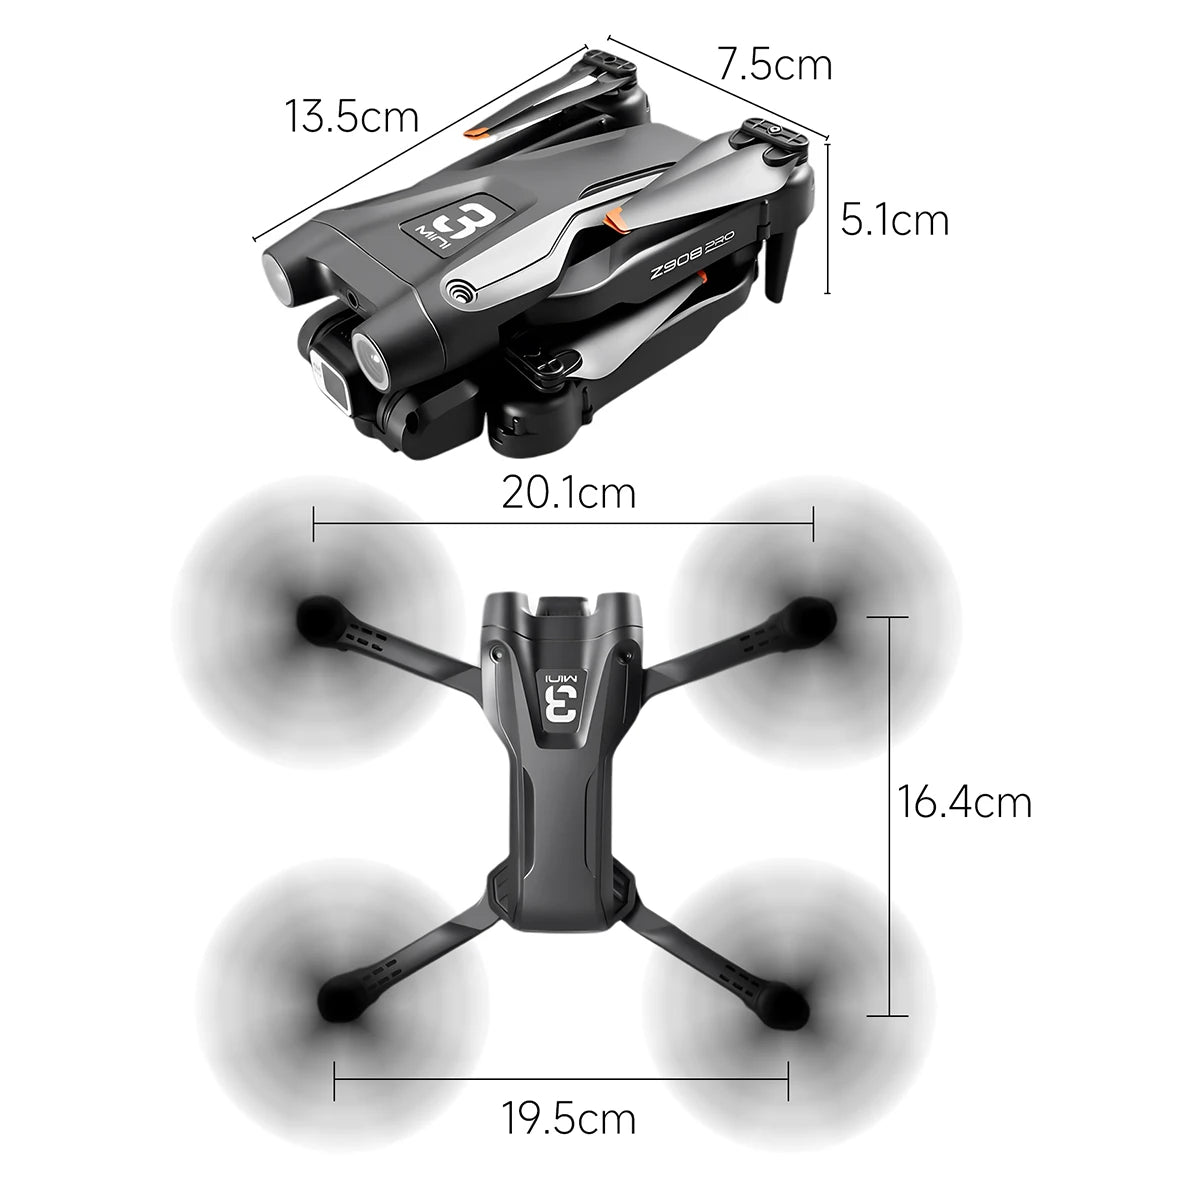 Z908 Pro Drone, 7.5cm 13.5cm 5.icm 20.1c